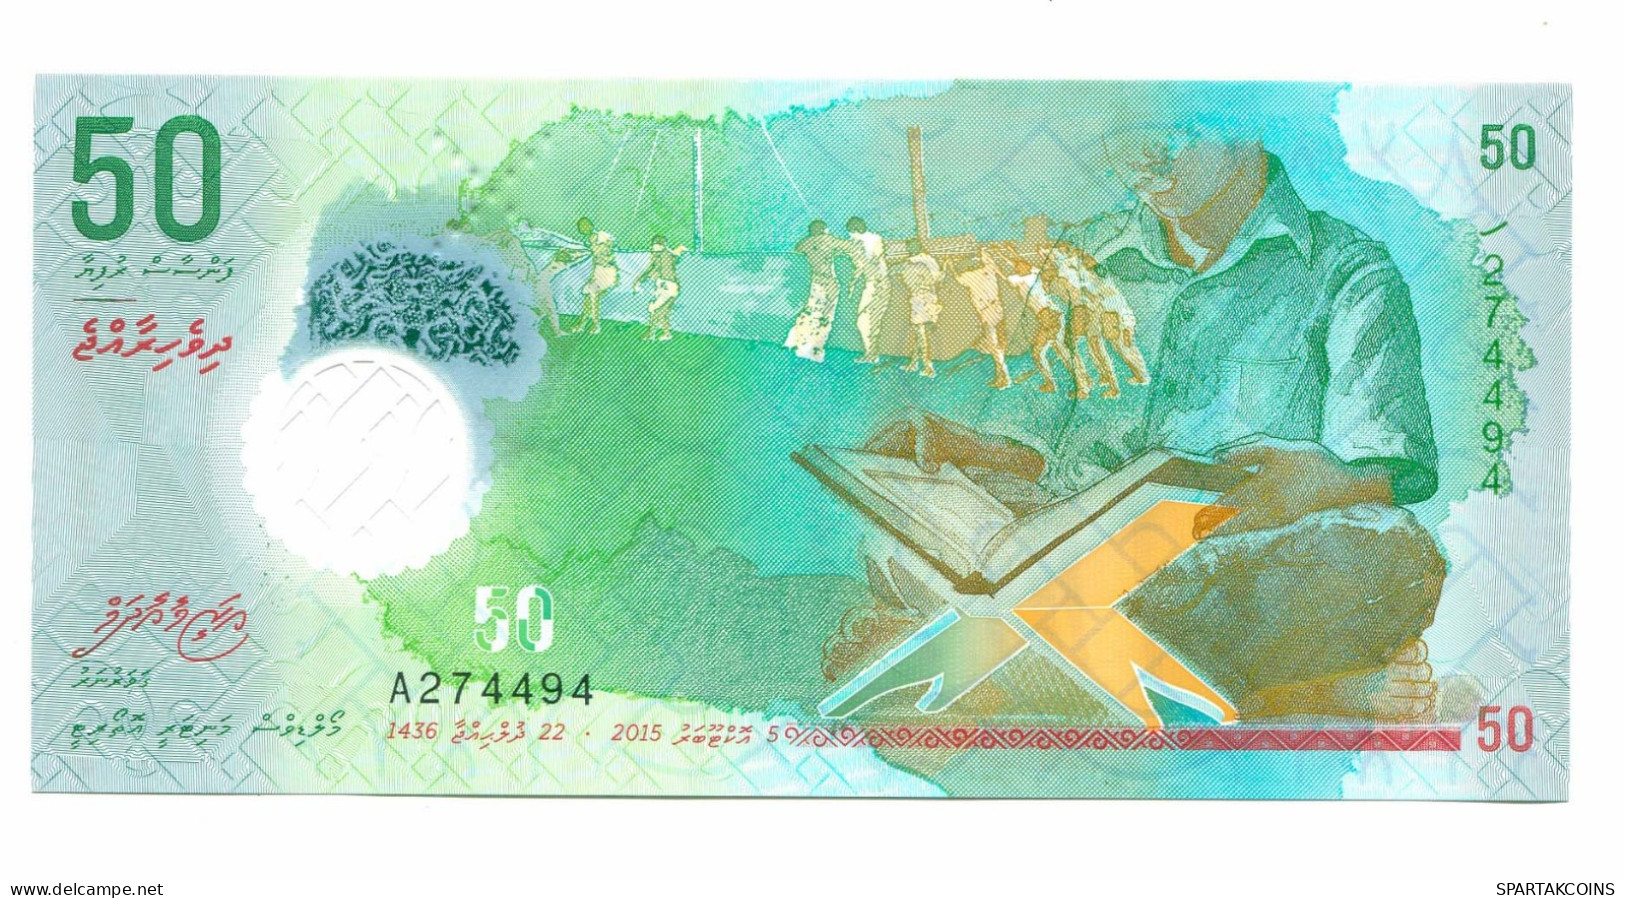 MALDIVES 50 RUFIYAA 2015(2016) POLYMER NOTE UNC P10974.9 - [11] Local Banknote Issues